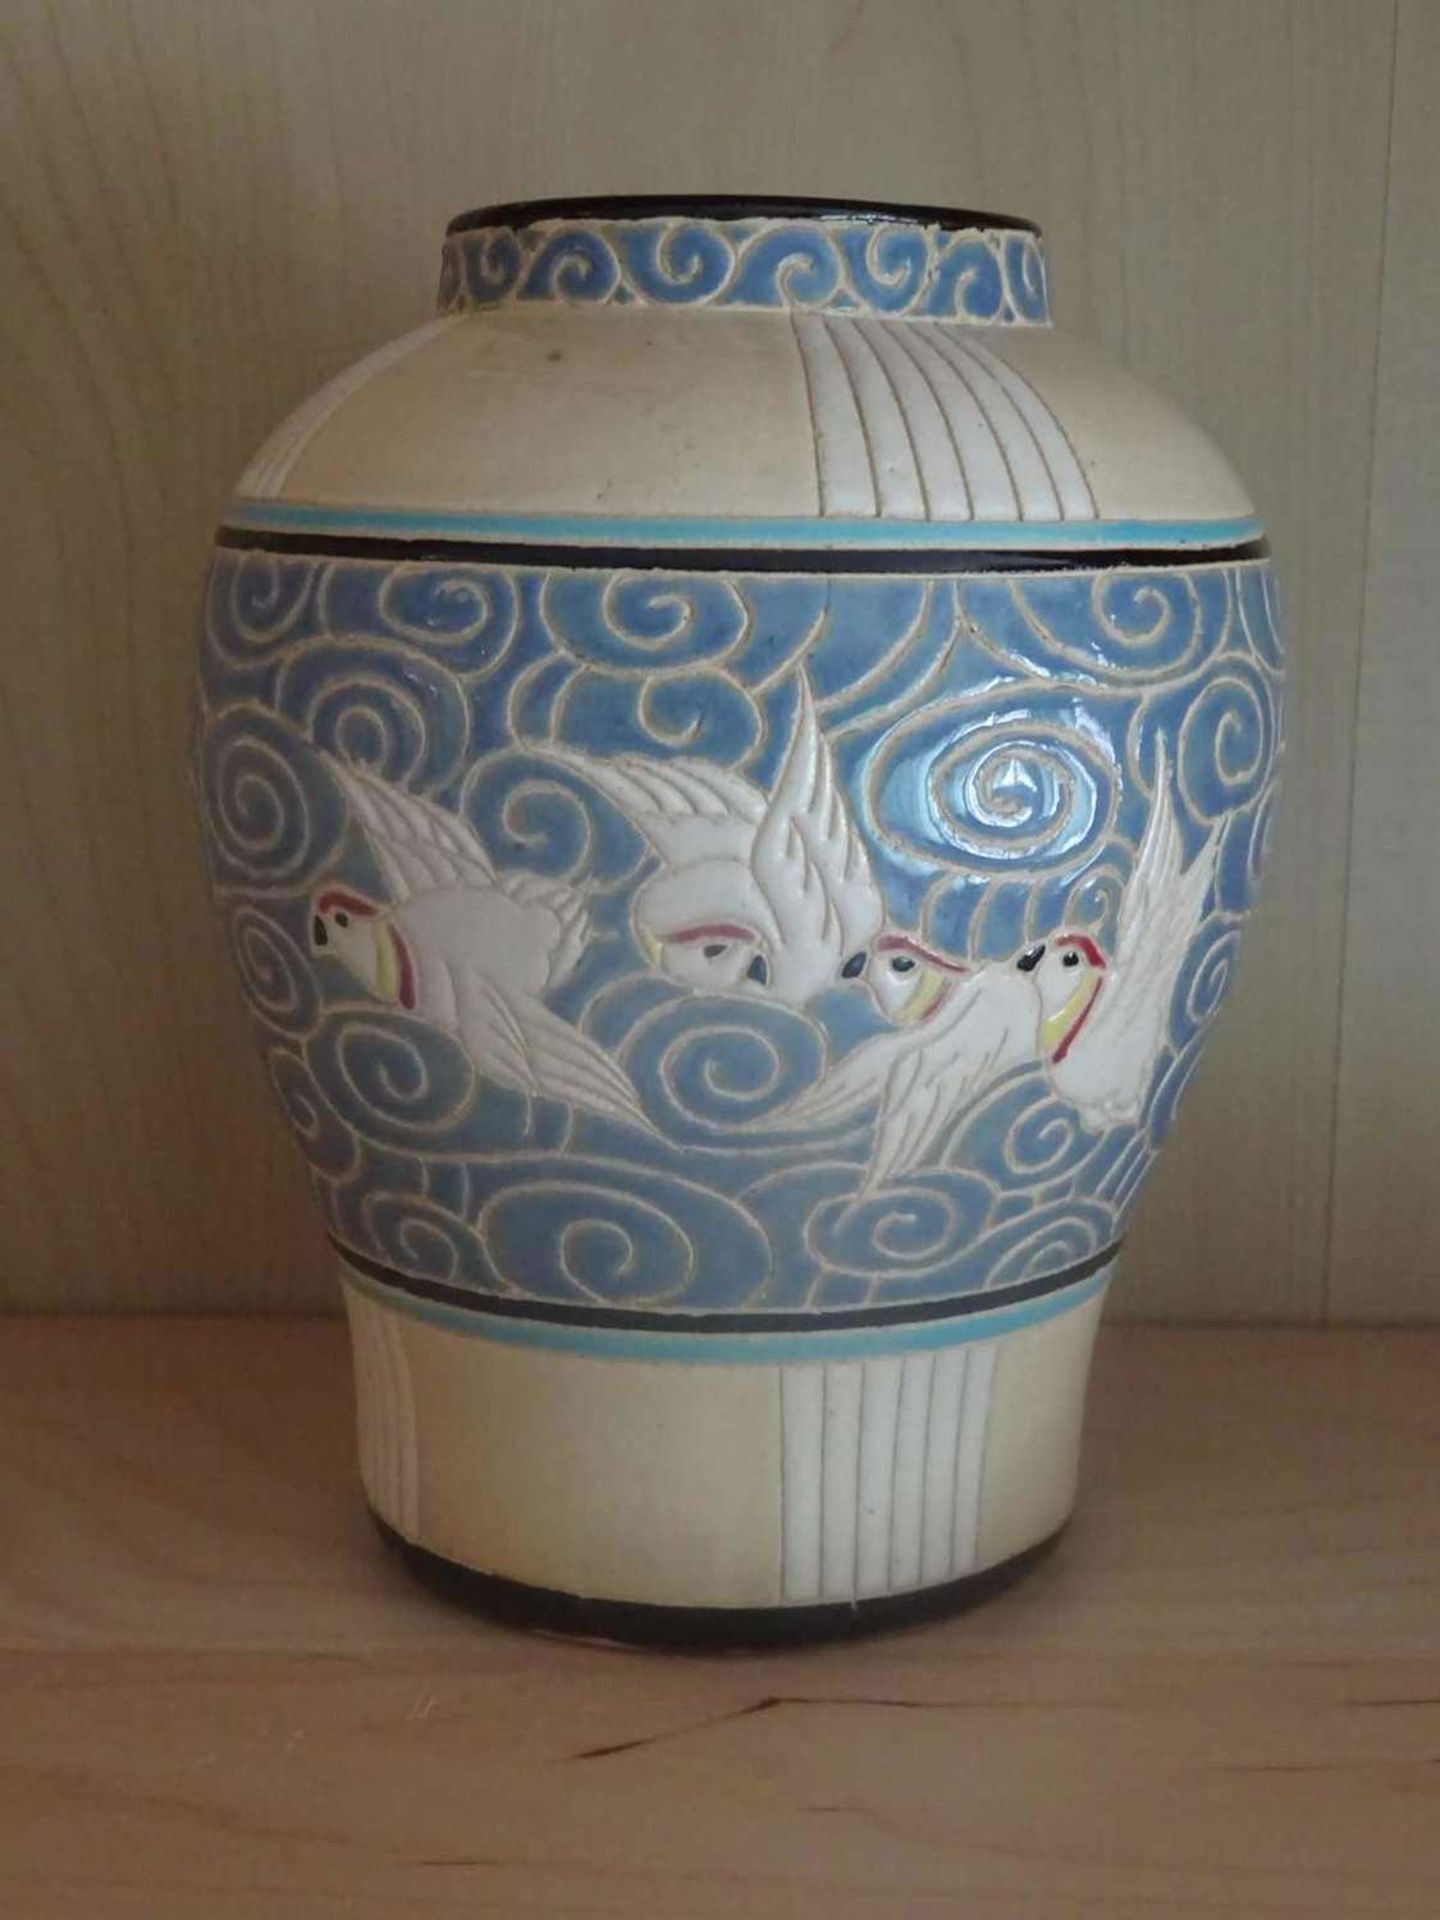 Art Deco ceramic vase, probably Boch-Freres. Good condition with fine scratch technique. Good